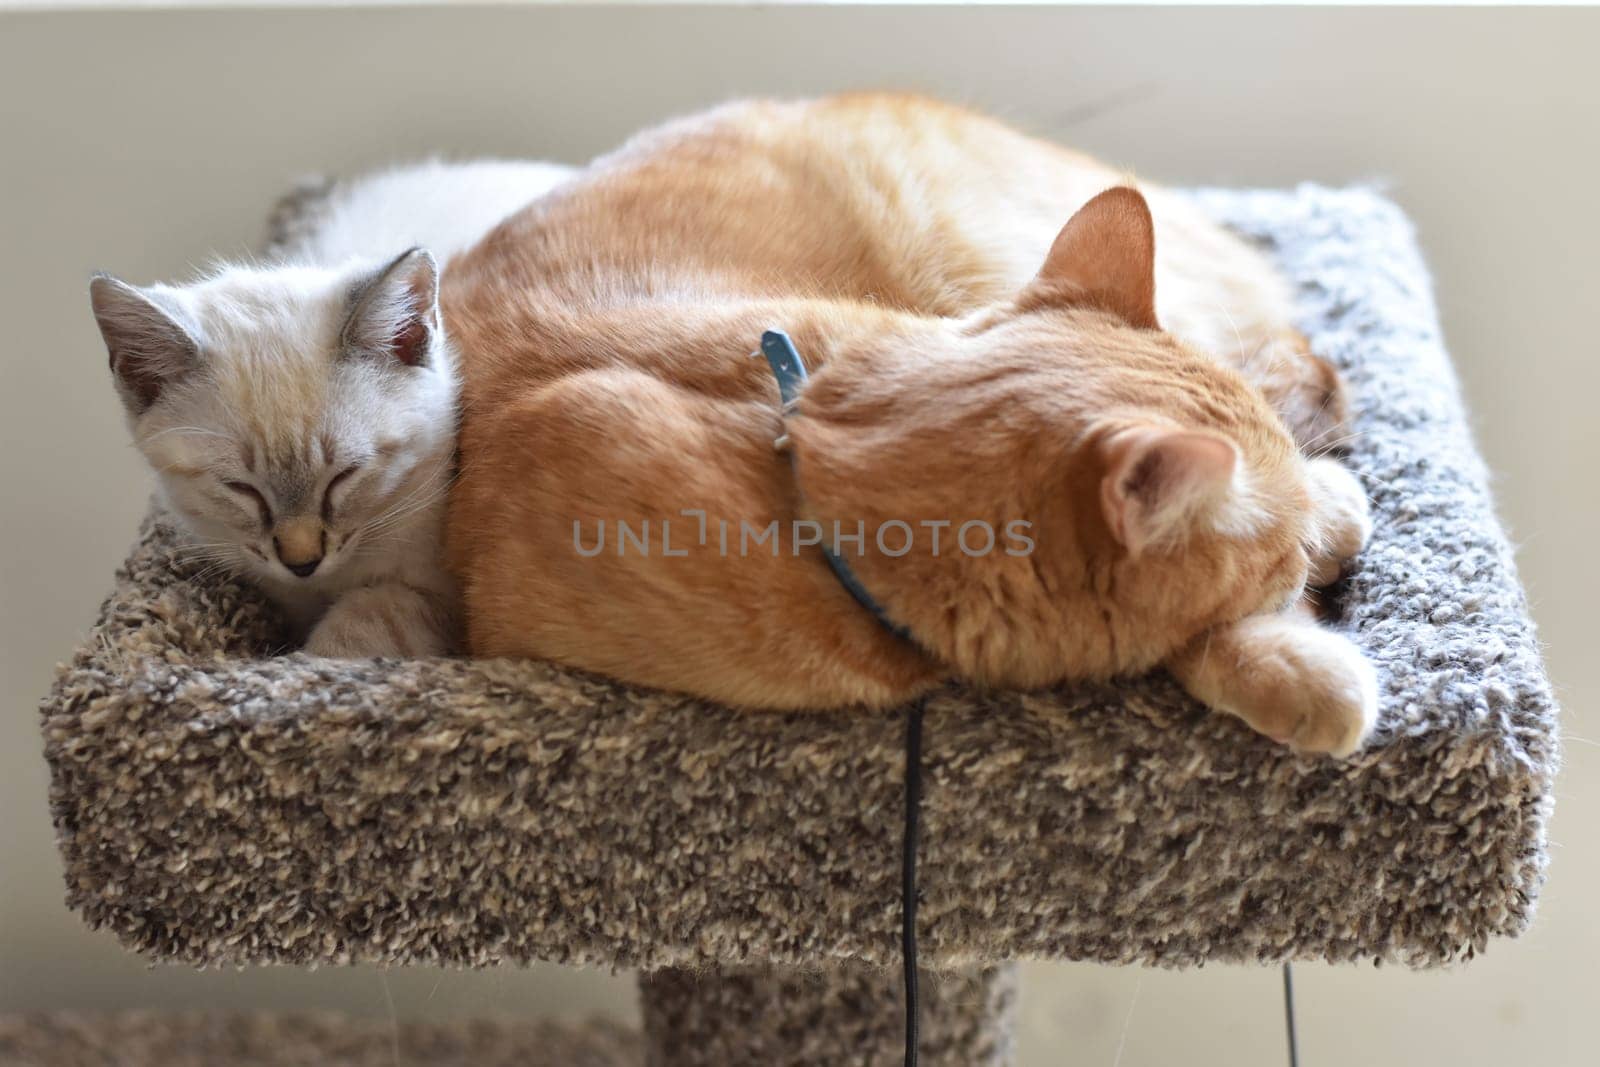 Orange Tabby Sleeping Funny and Small Kitten Awake. High quality photo